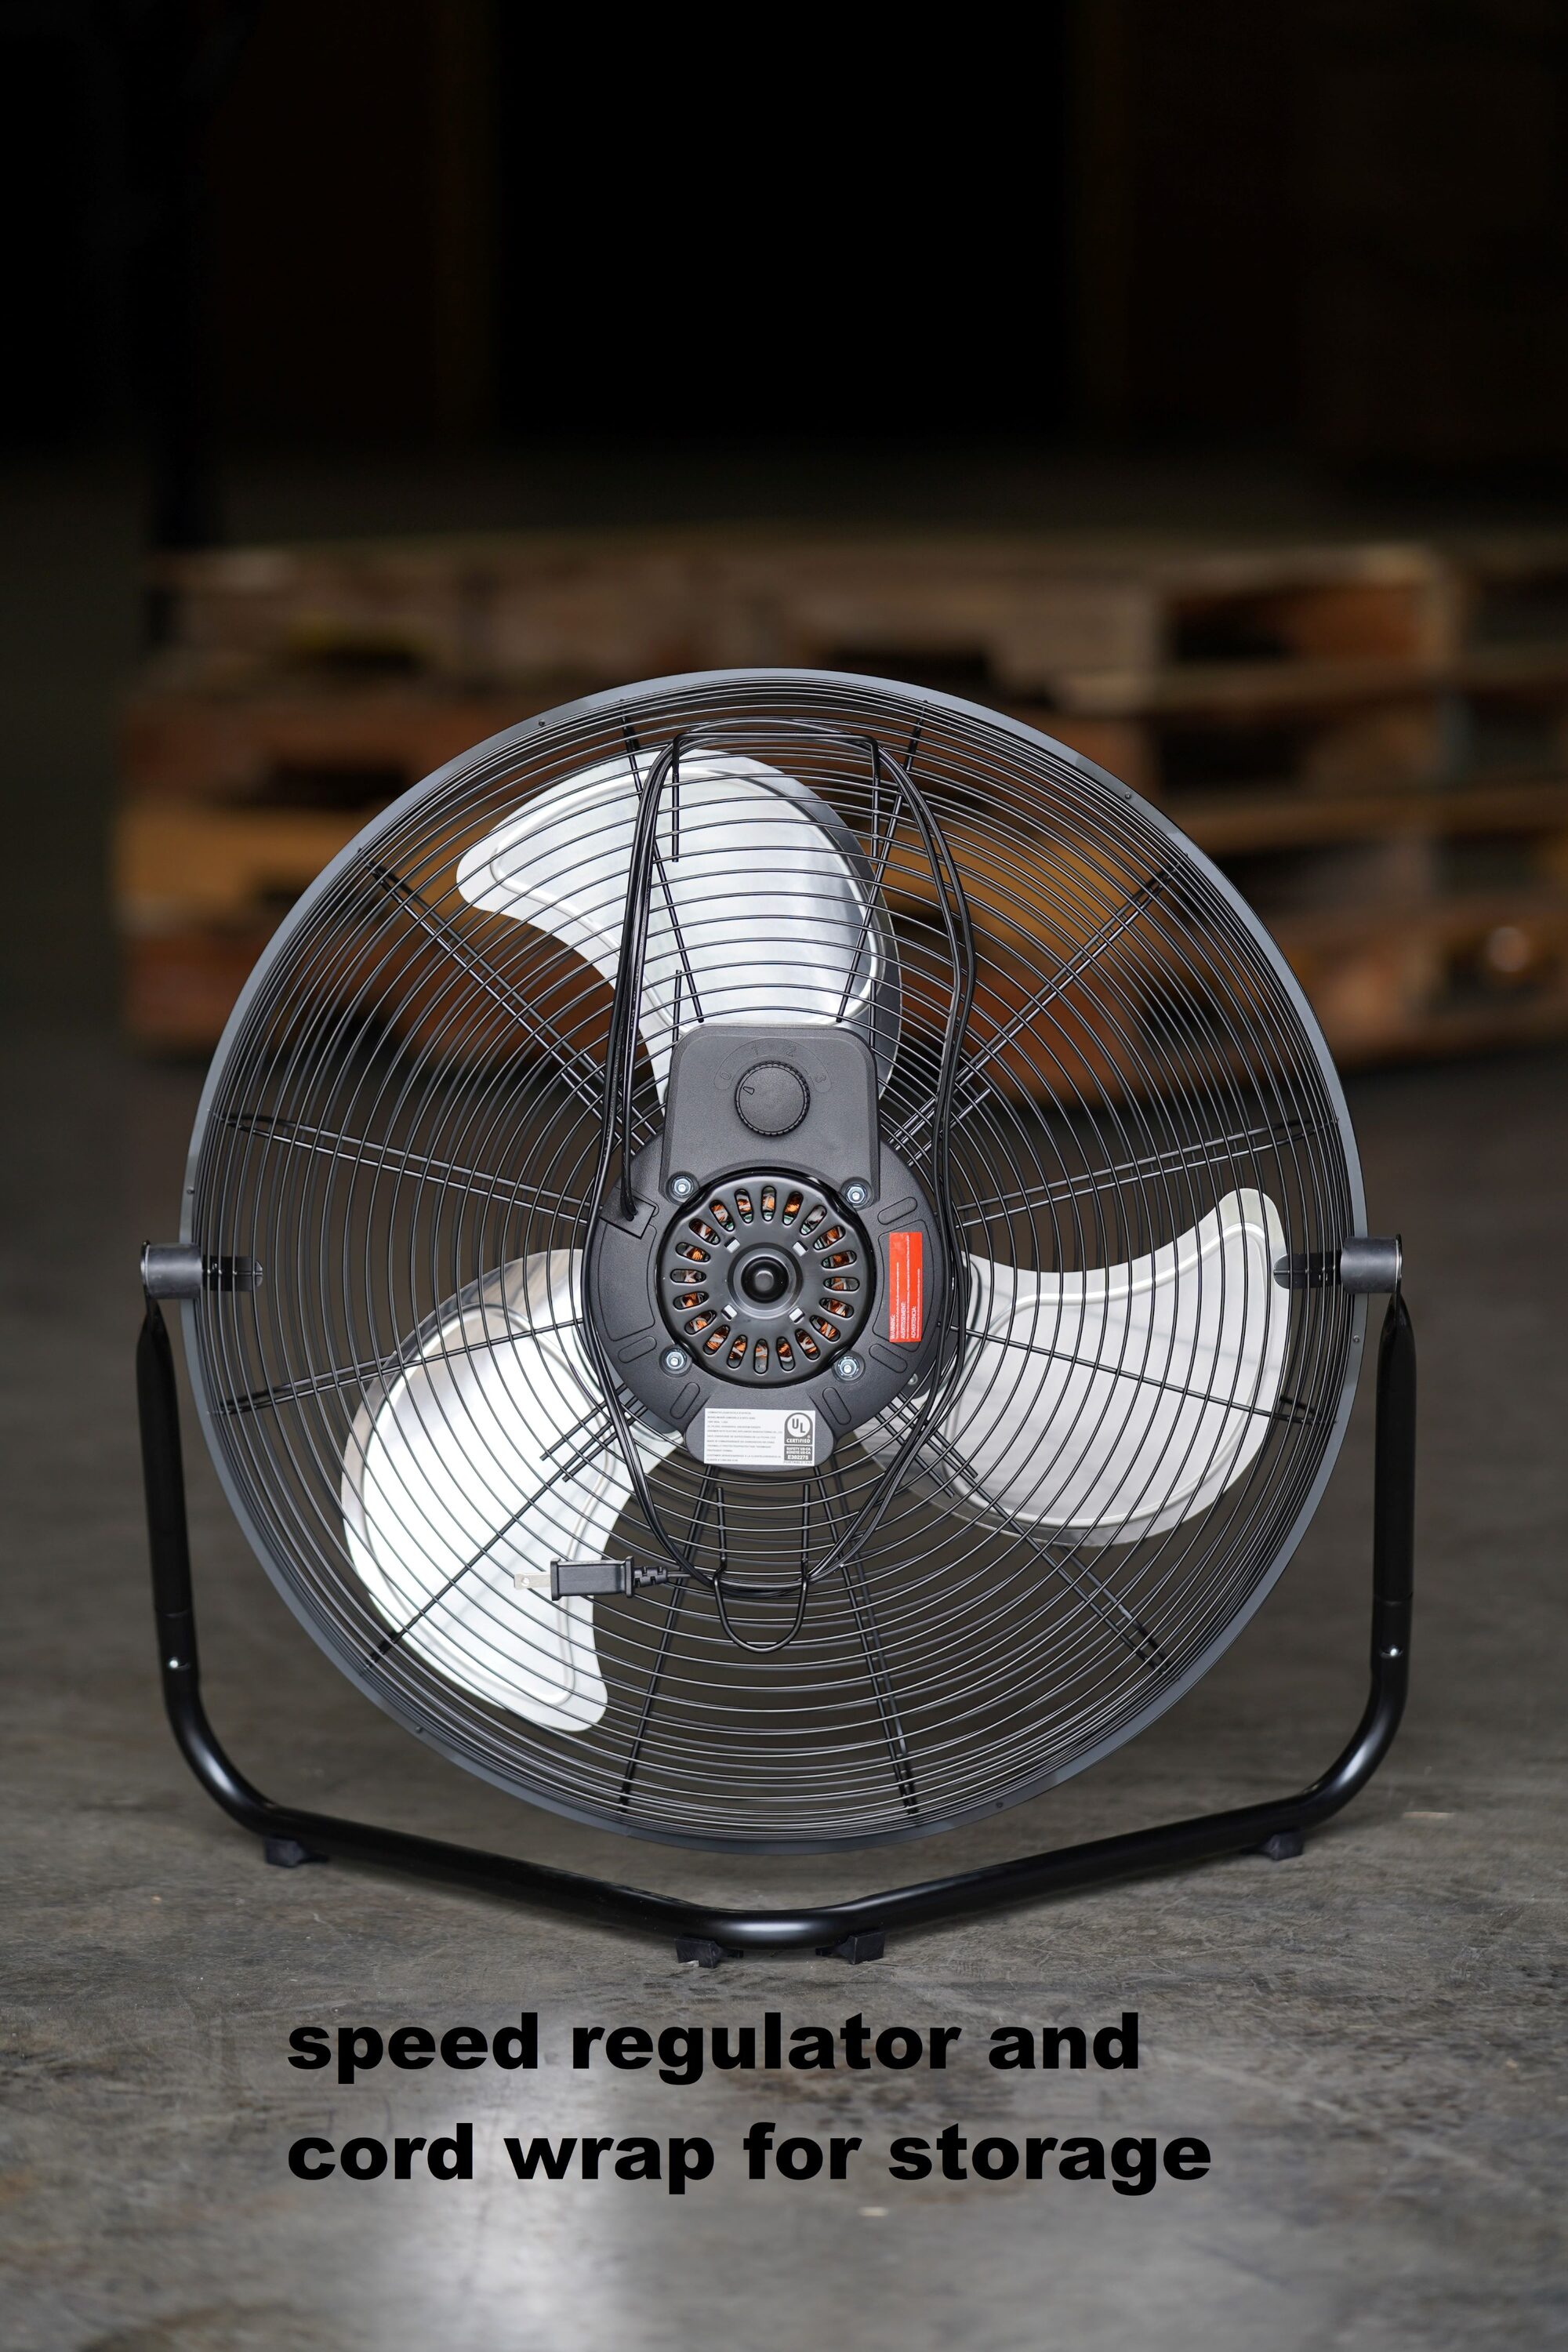 Mainstays 20-Inch 3-Speed High Velocity Steel Floor Fan, Black